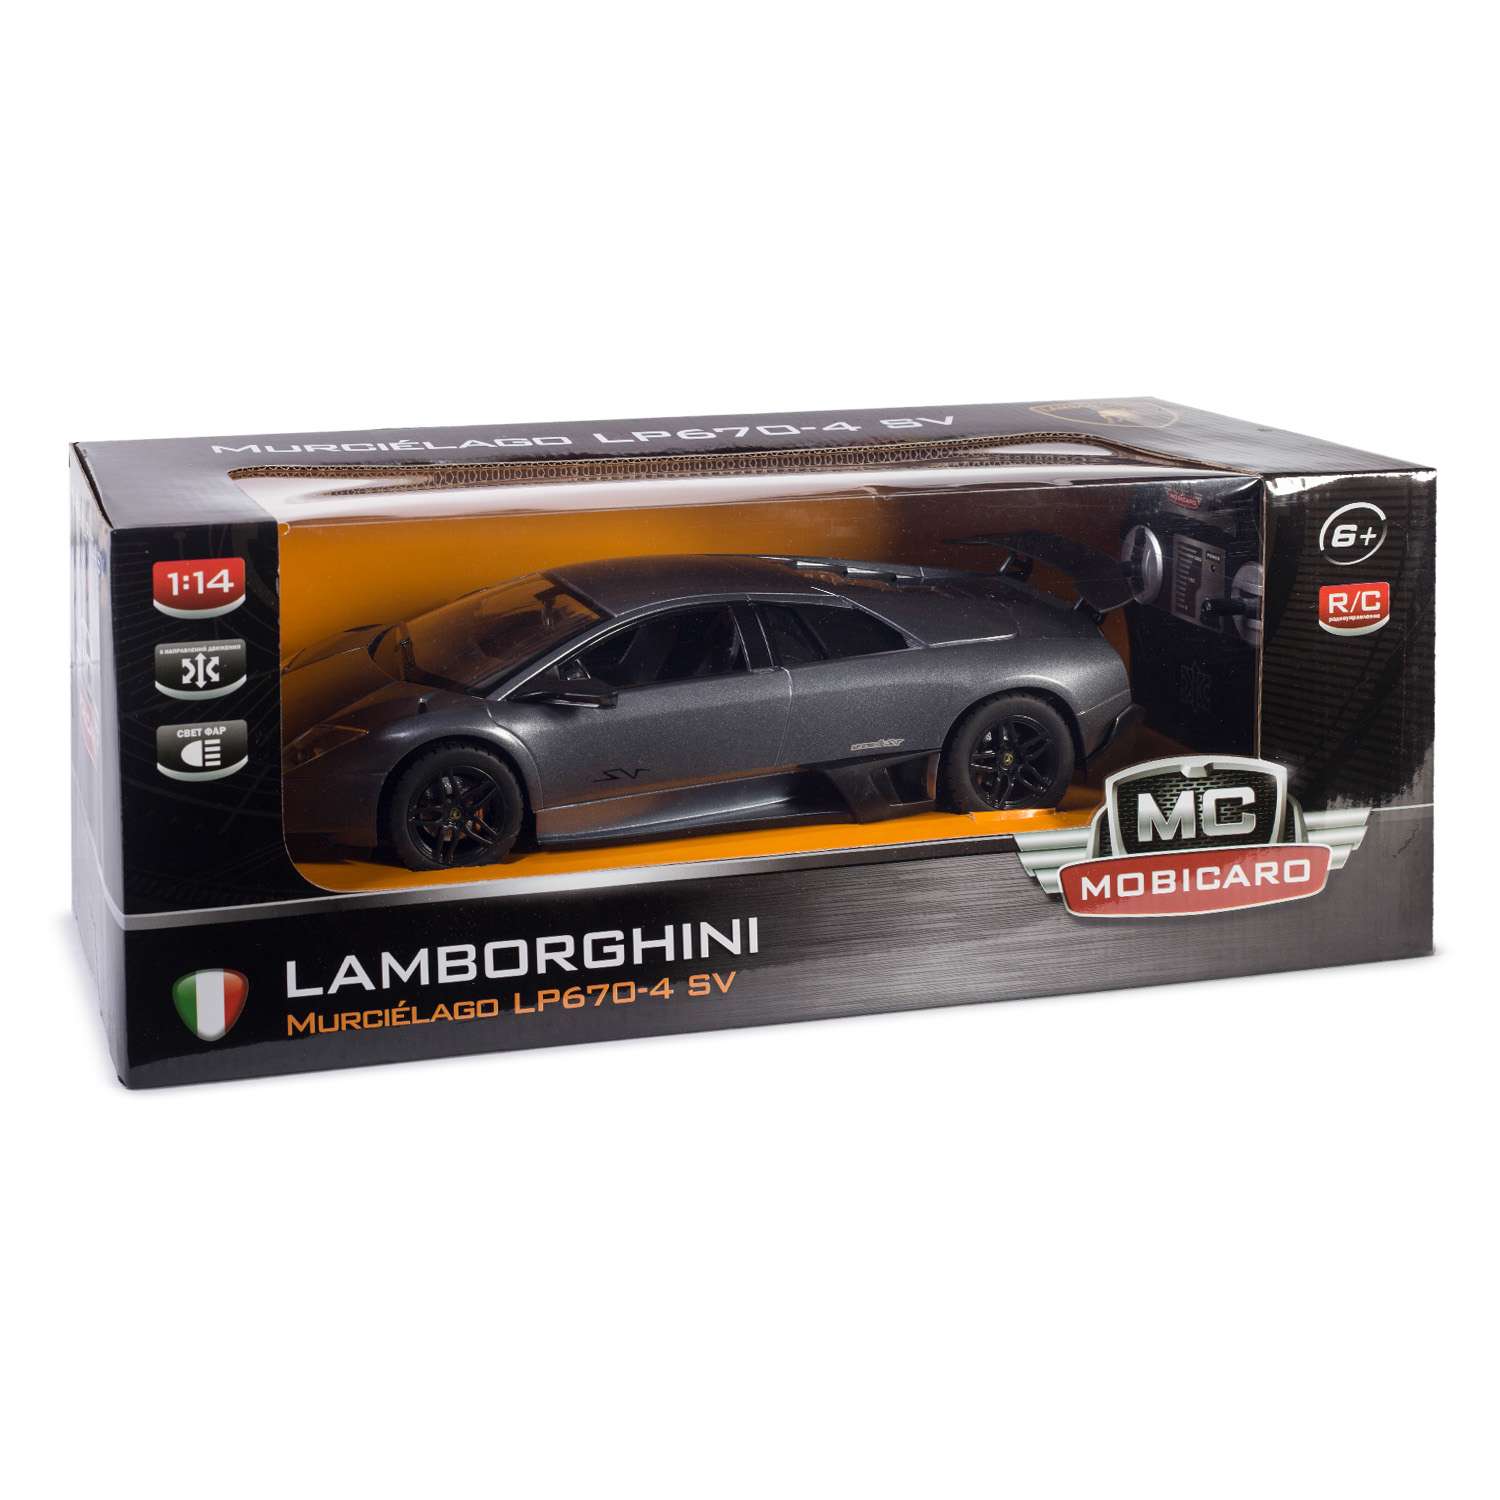 Машинка р/у Mobicaro Lamborghini LP670 (серая) 1:14 34 см - фото 3